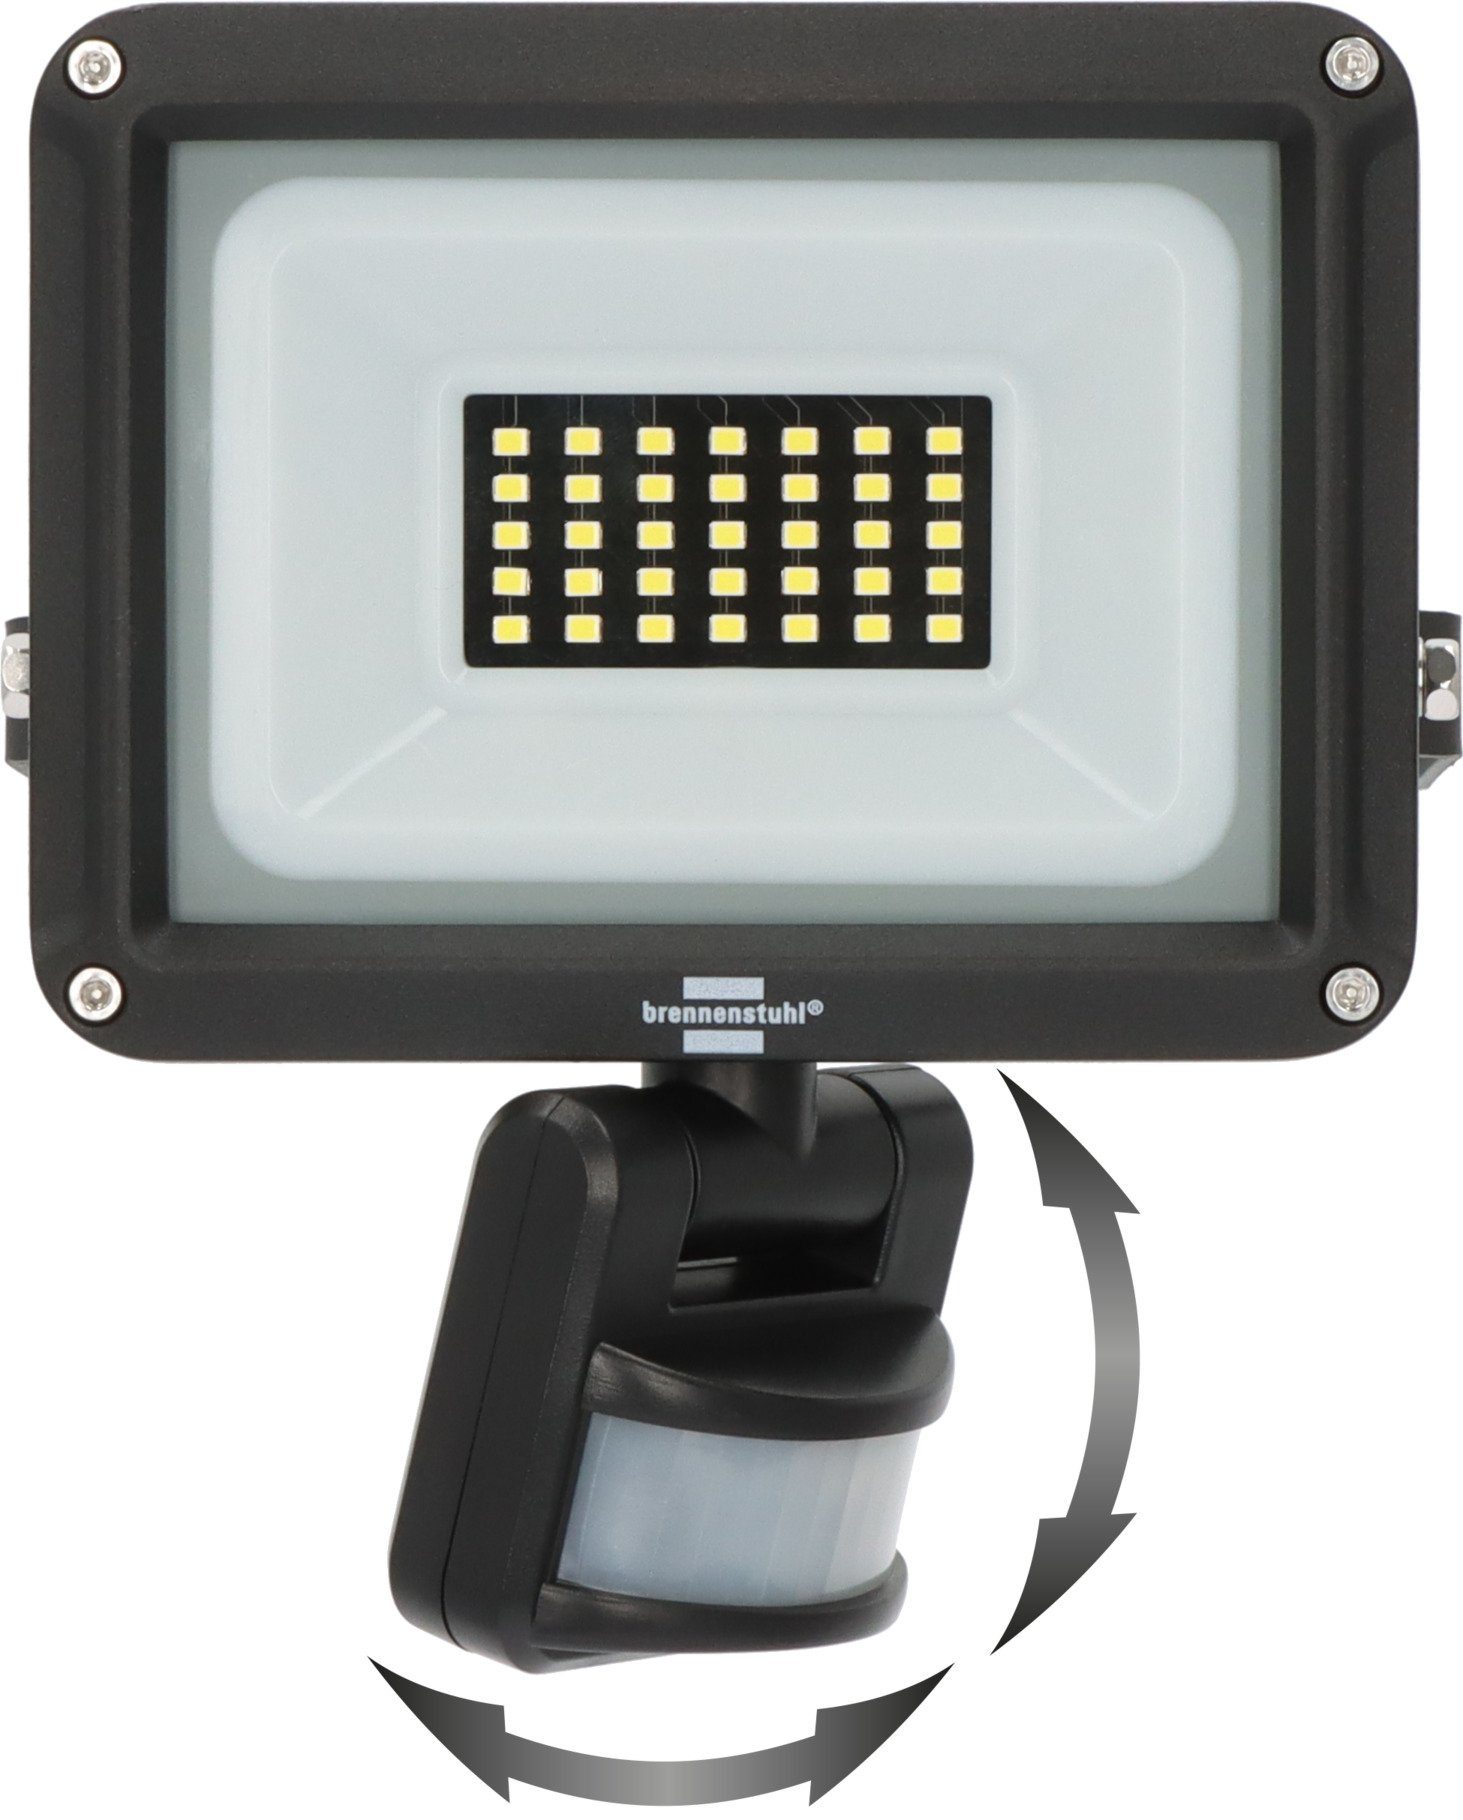 LED für außen JARO Wandstrahler Brennenstuhl 3060 integriert, fest P, LED